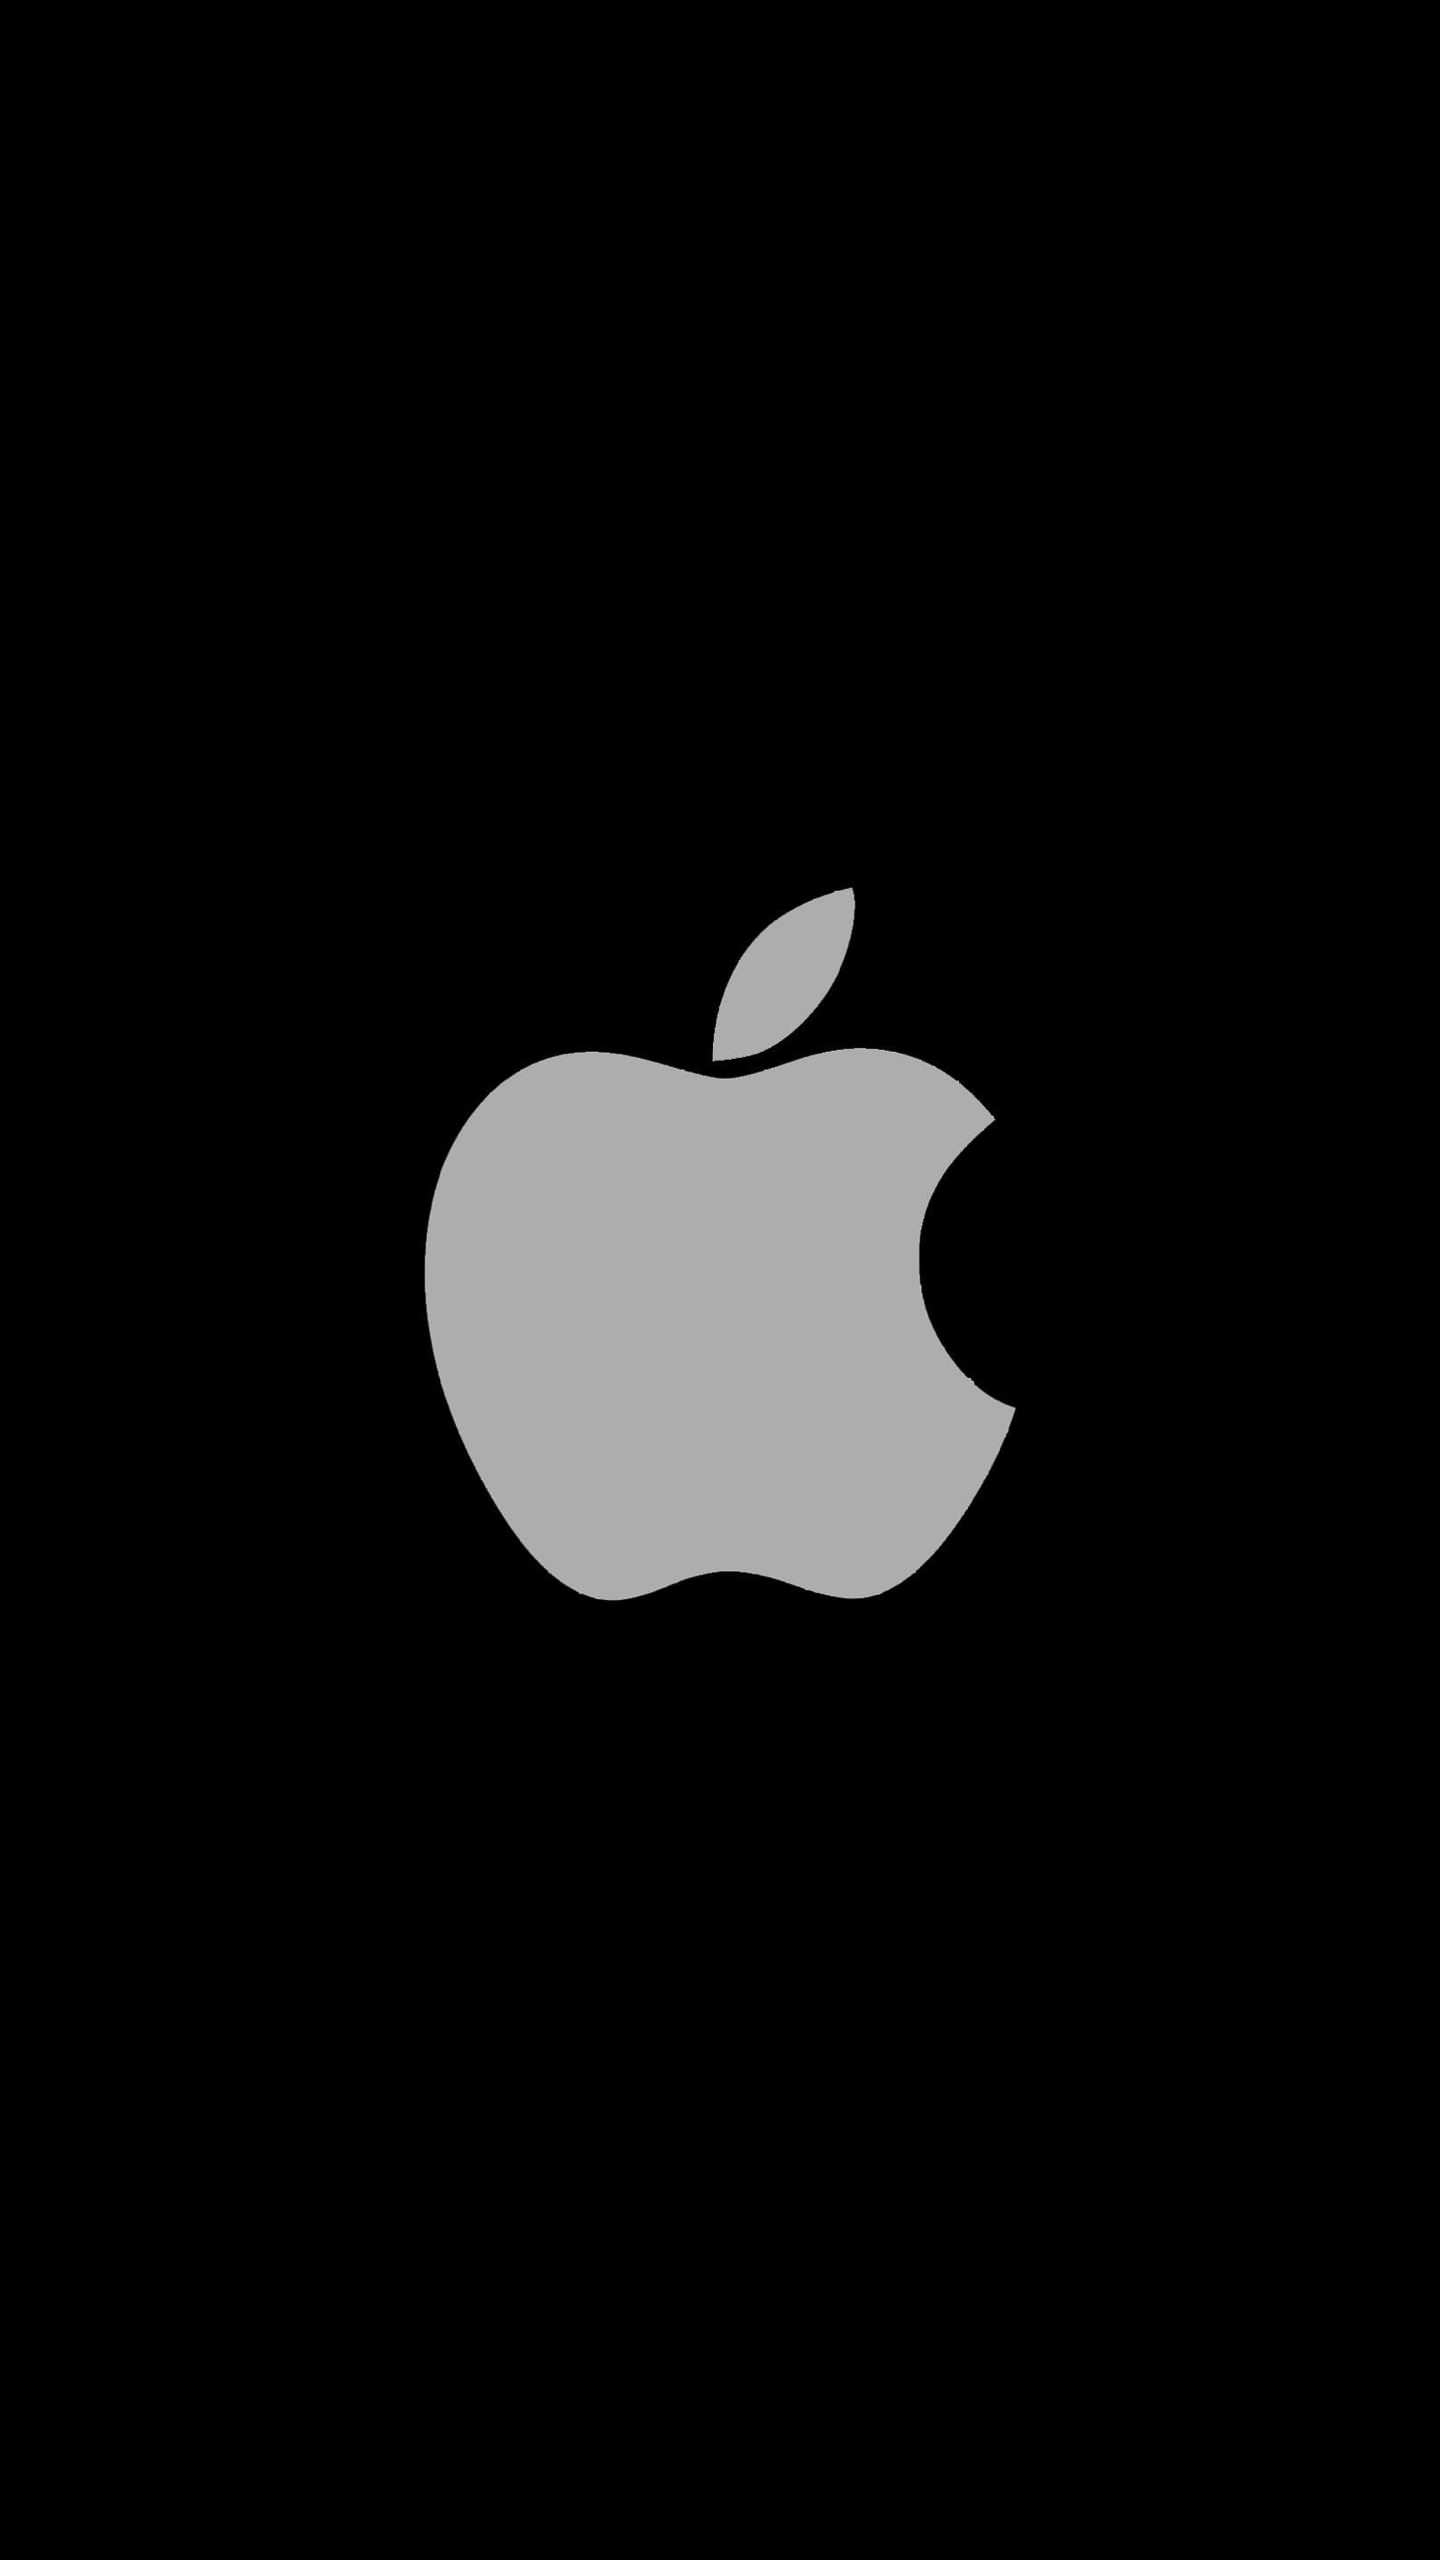 Apple logo black cool wallpaper sc SmartPhone